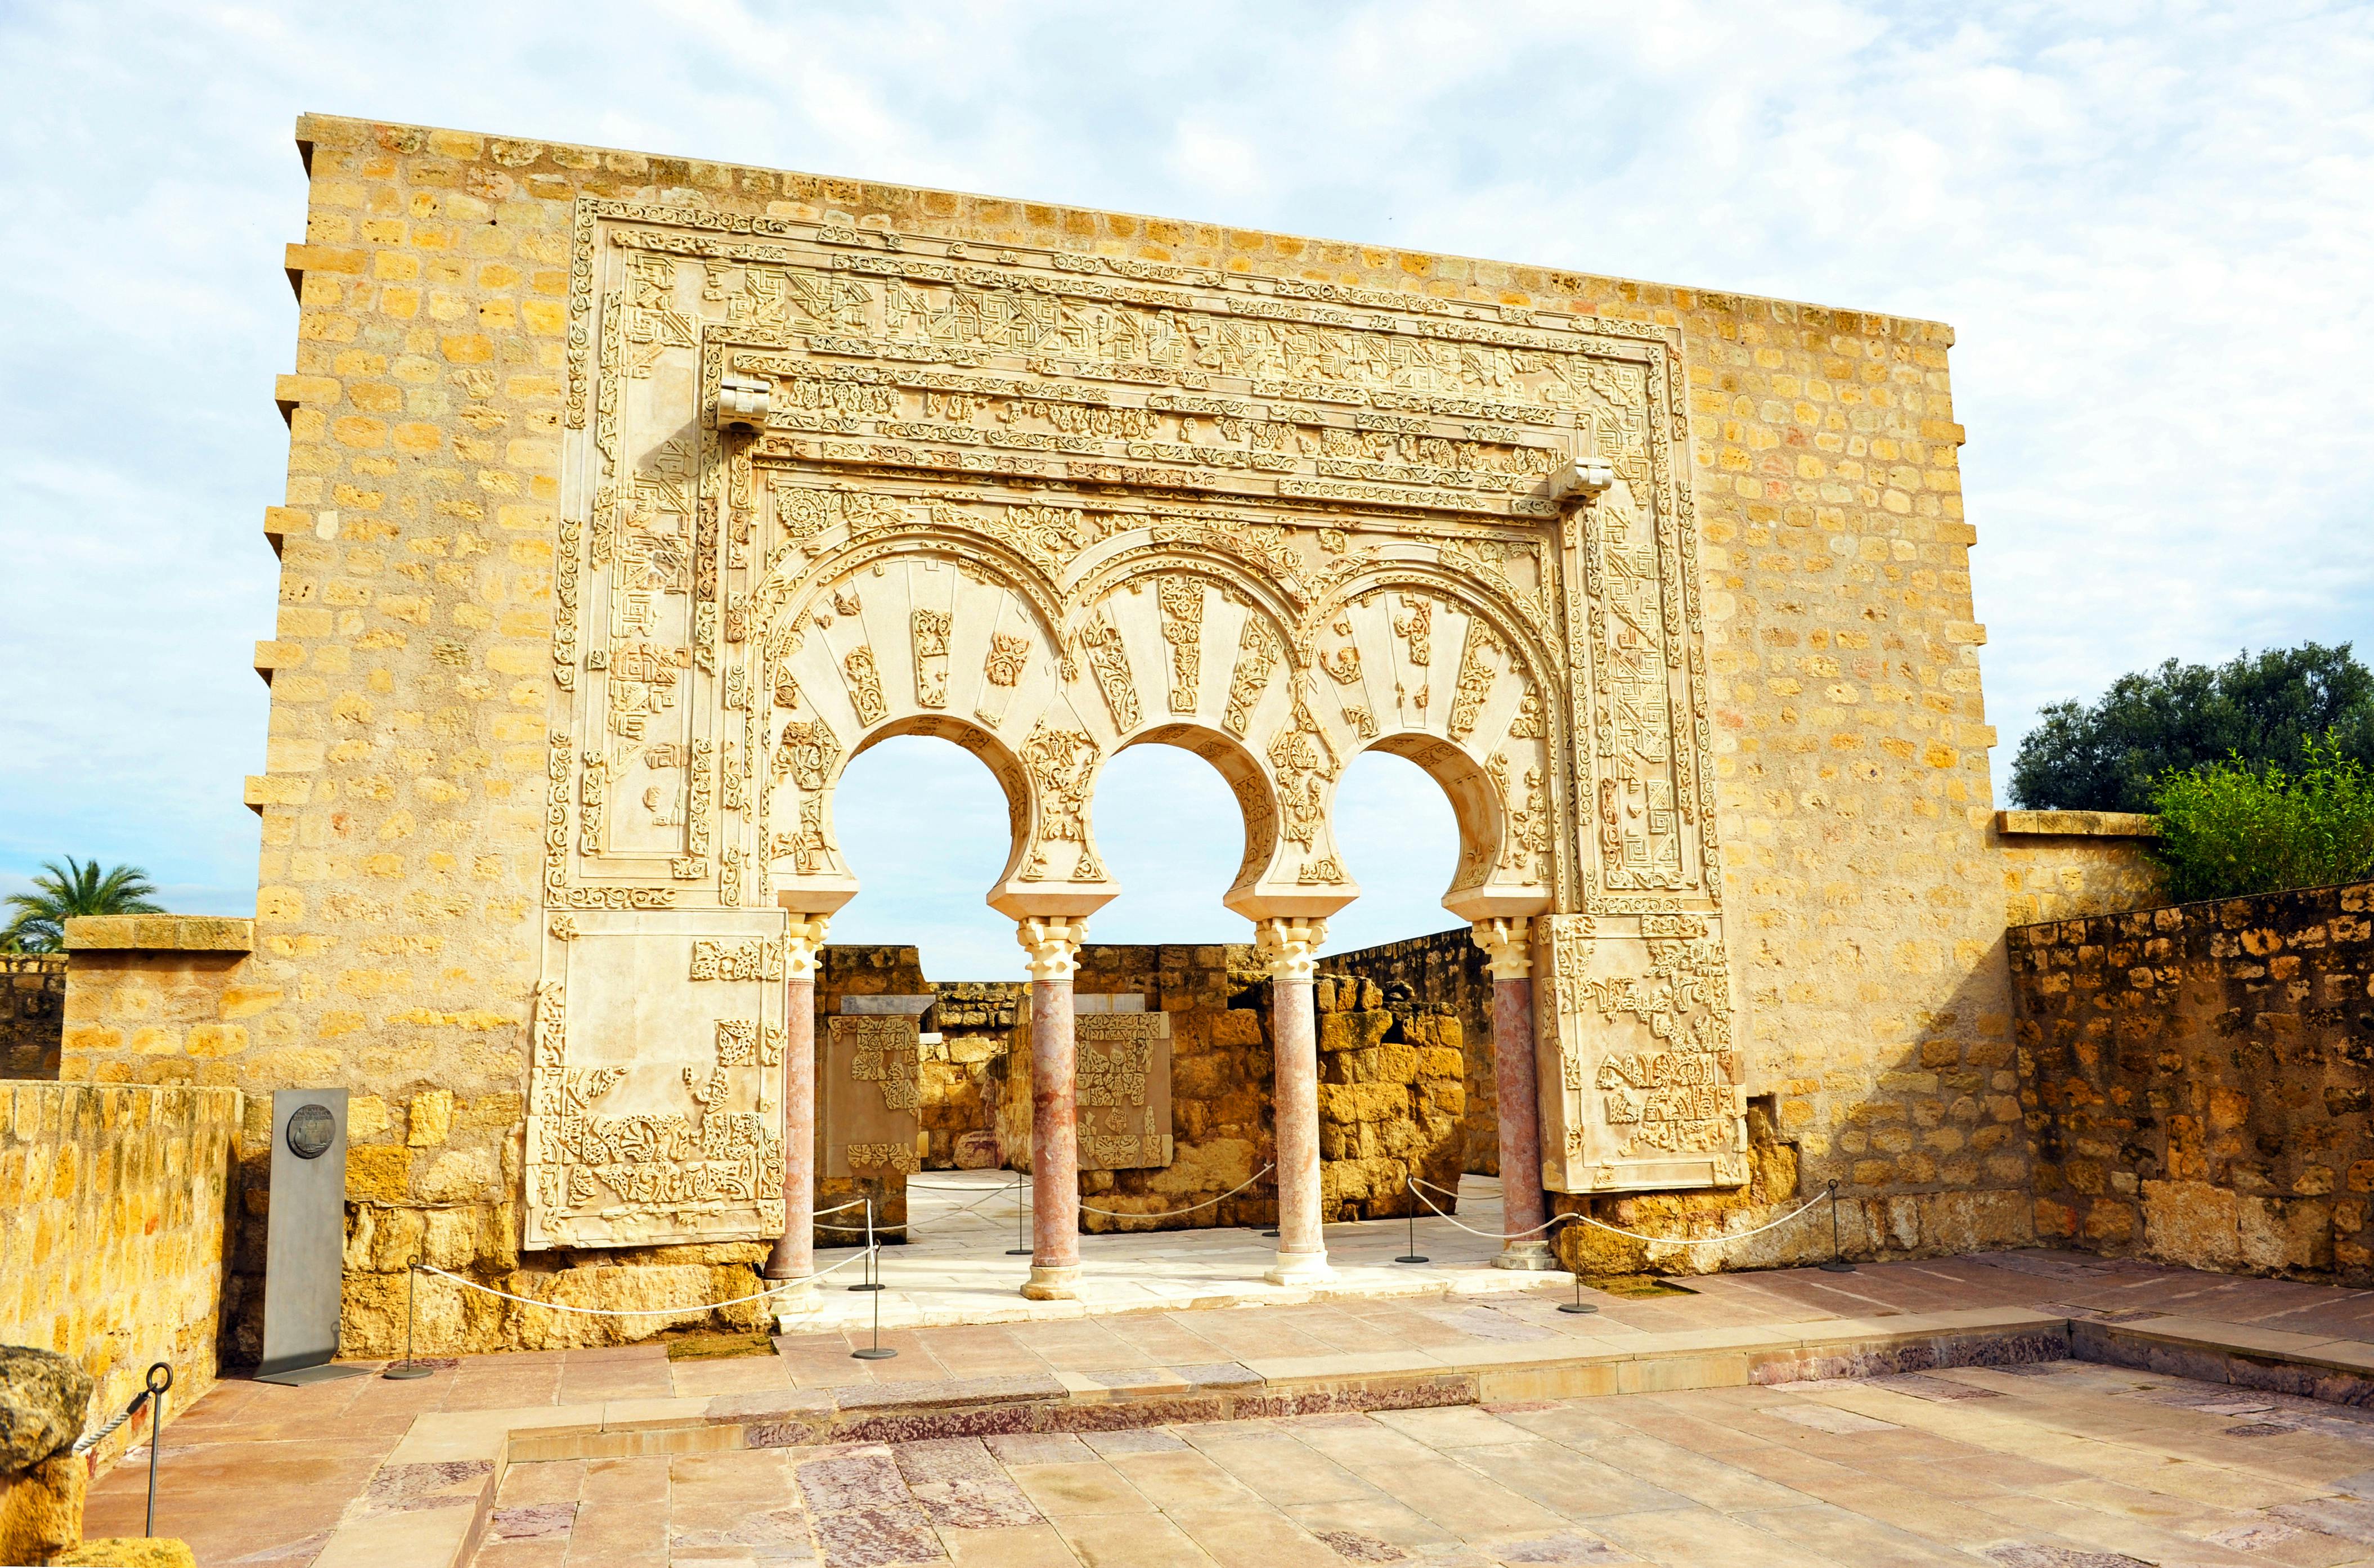 Visita guiada ao sítio arqueológico Medina Azahara